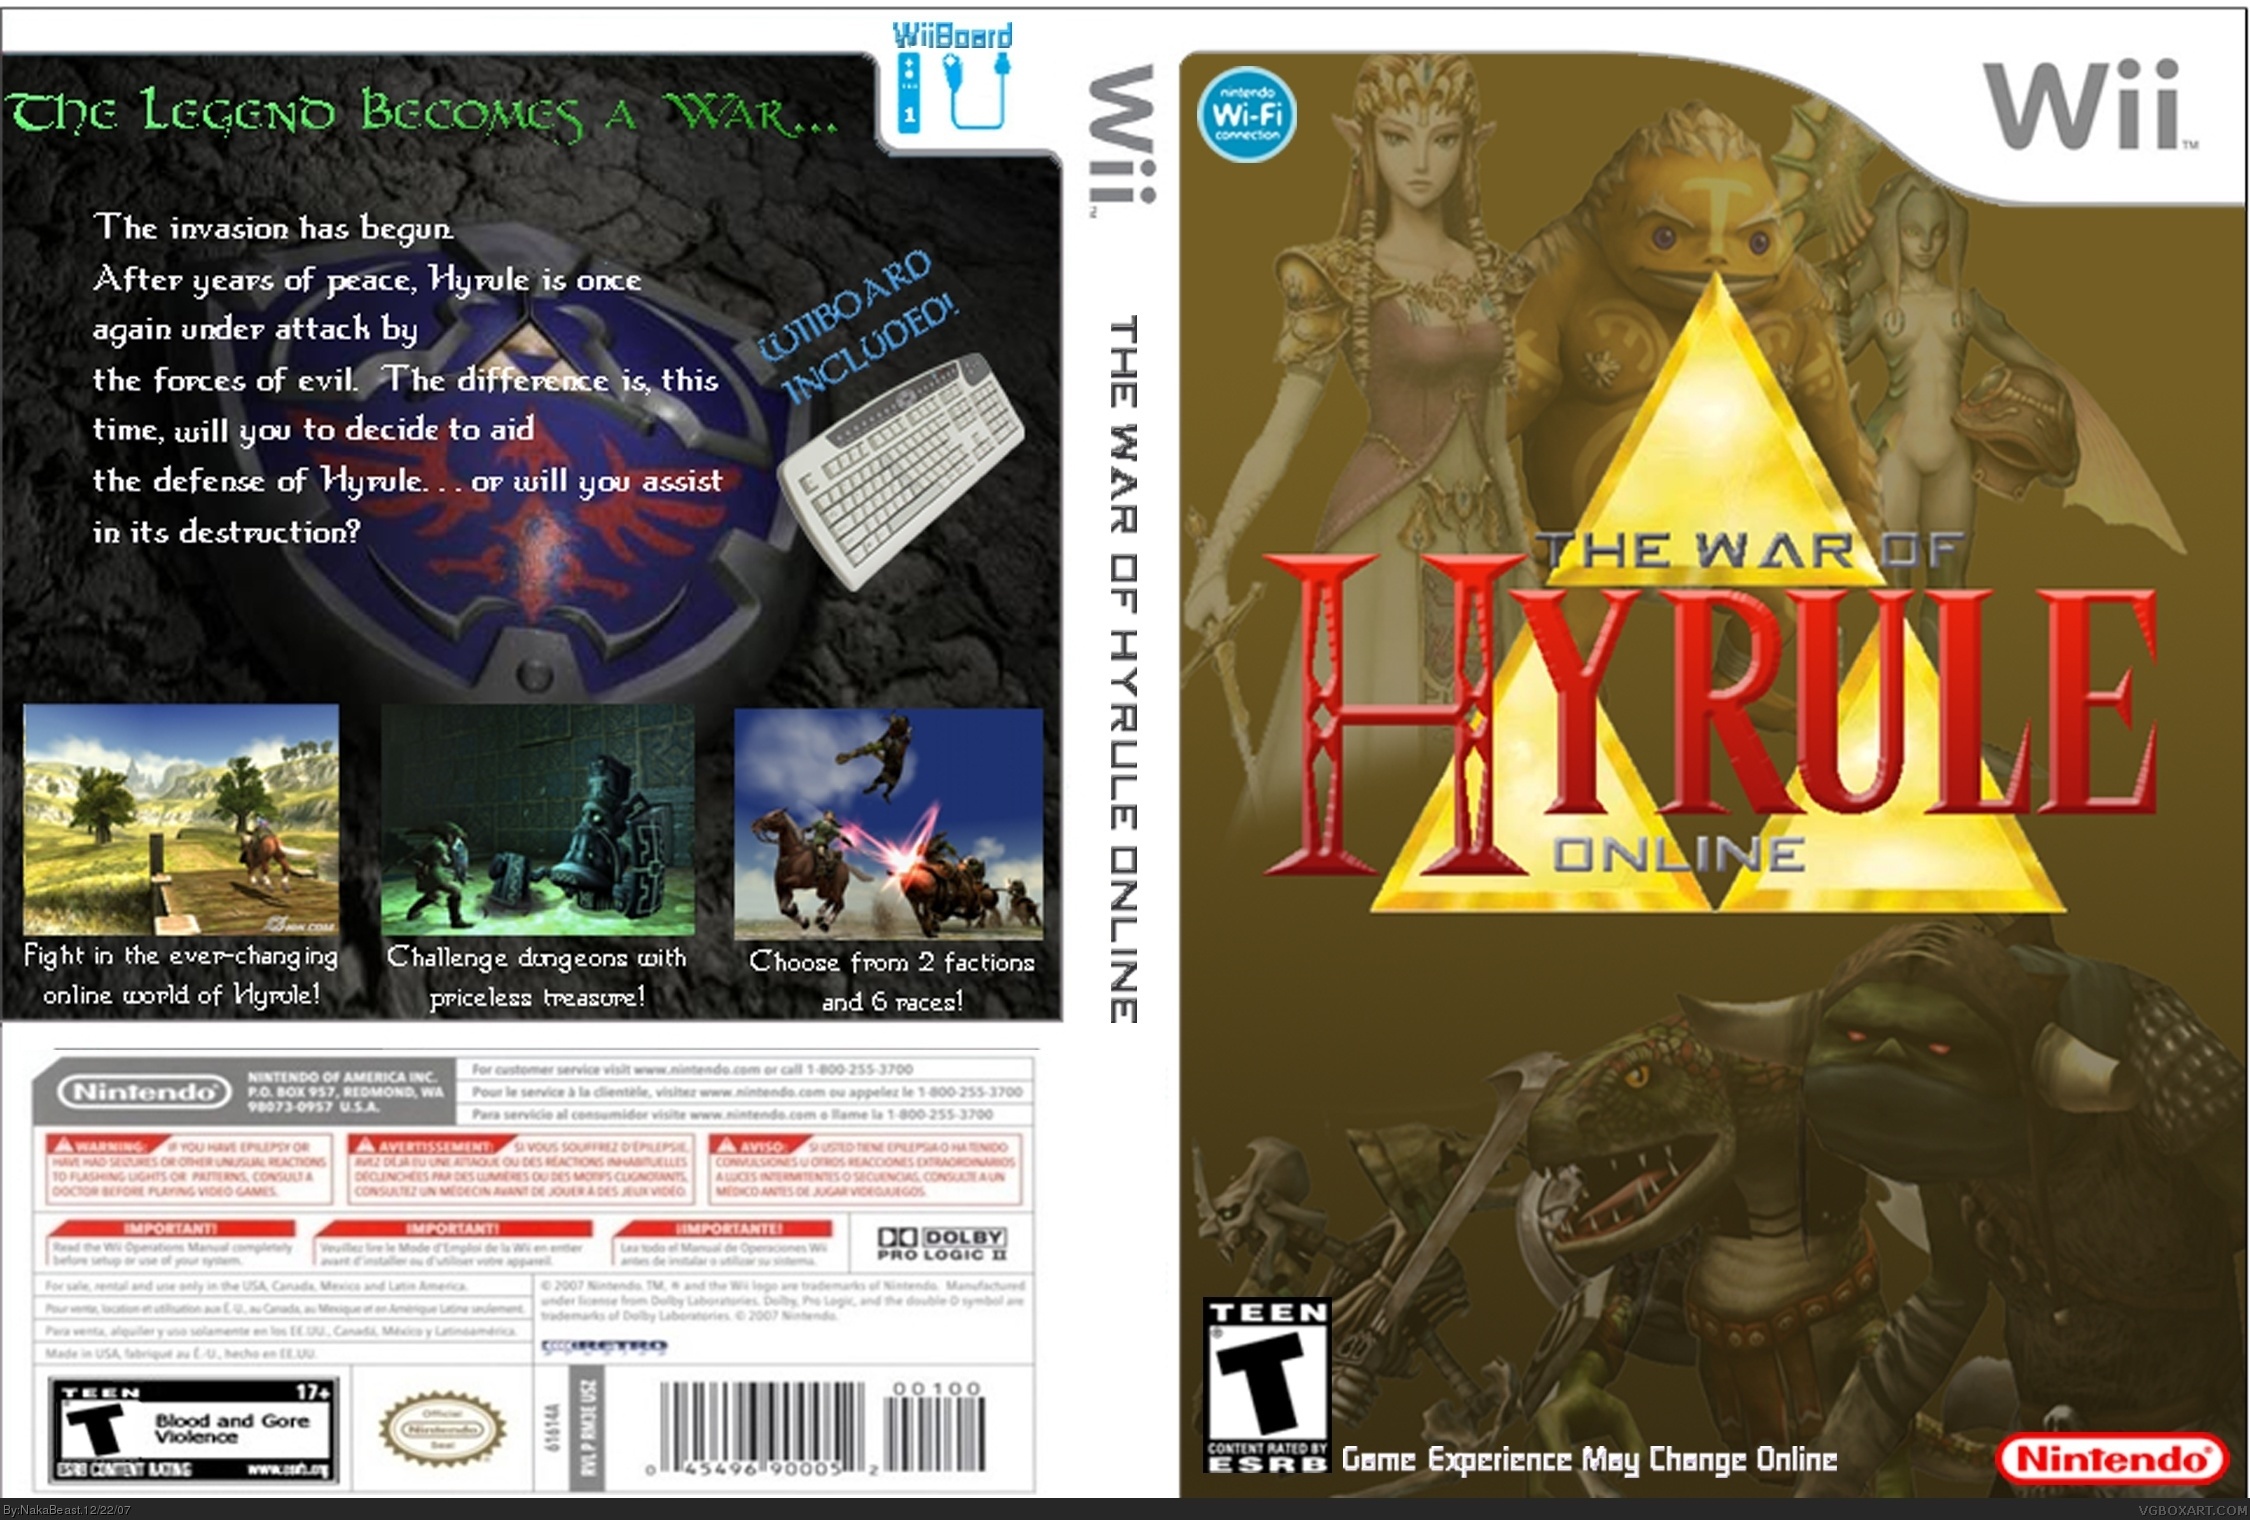 The War of Hyrule (The Legend of Zelda Online) box cover